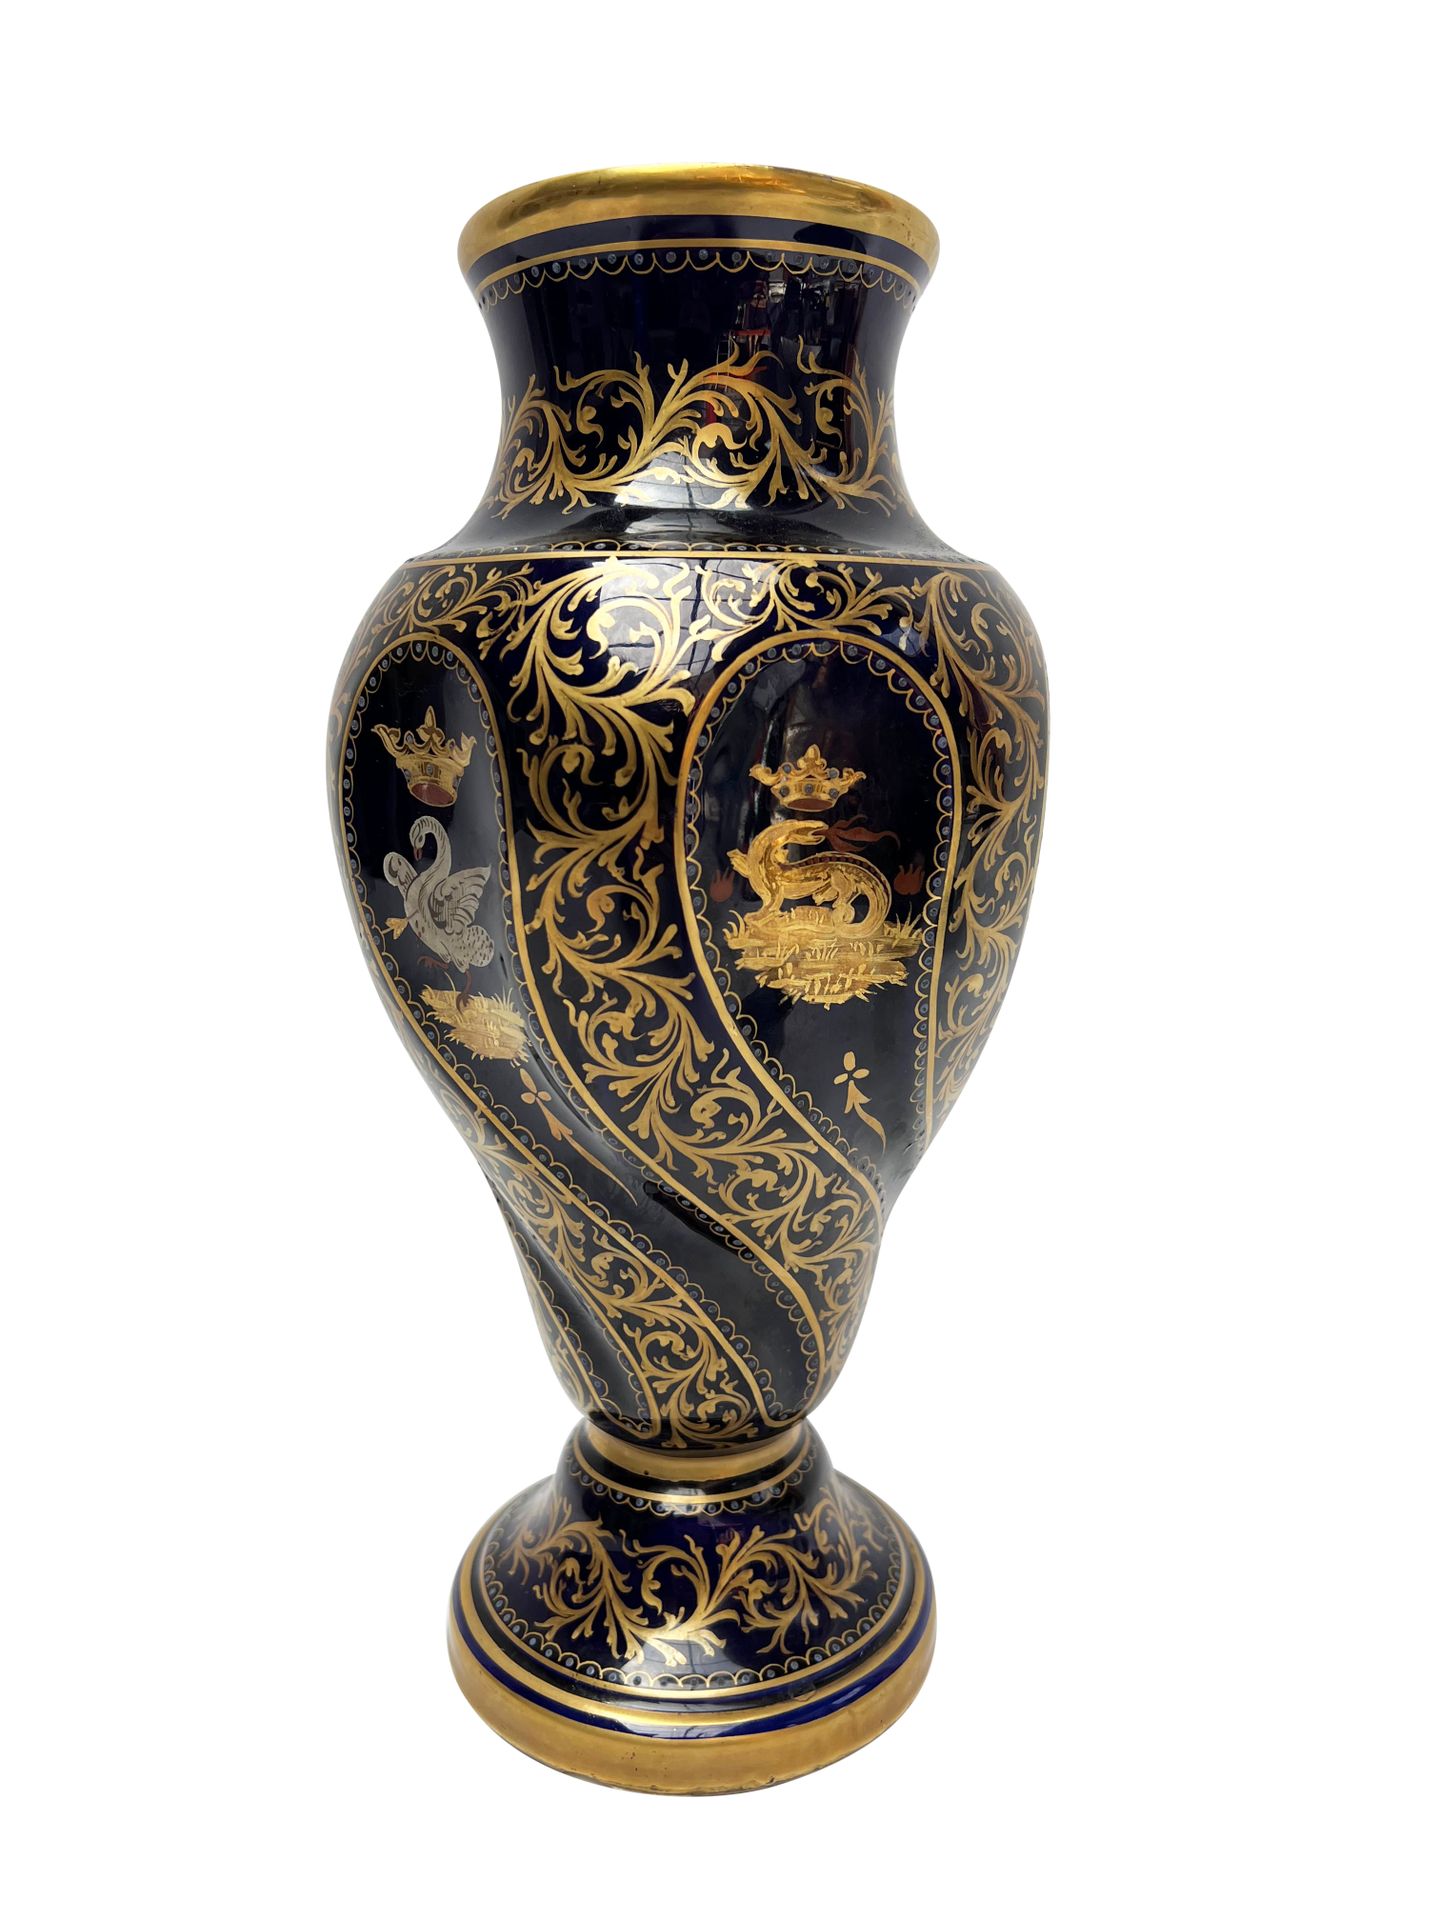 Null 19世纪末的作品、
深夜蓝色背景的陶瓷基座上的柱状花瓶，瓶身有一个躯干图案。
丰富的多色装饰，蝾螈、朱雀和天鹅的冠冕与纹章图案交替出现。
叶子的镀金亮&hellip;